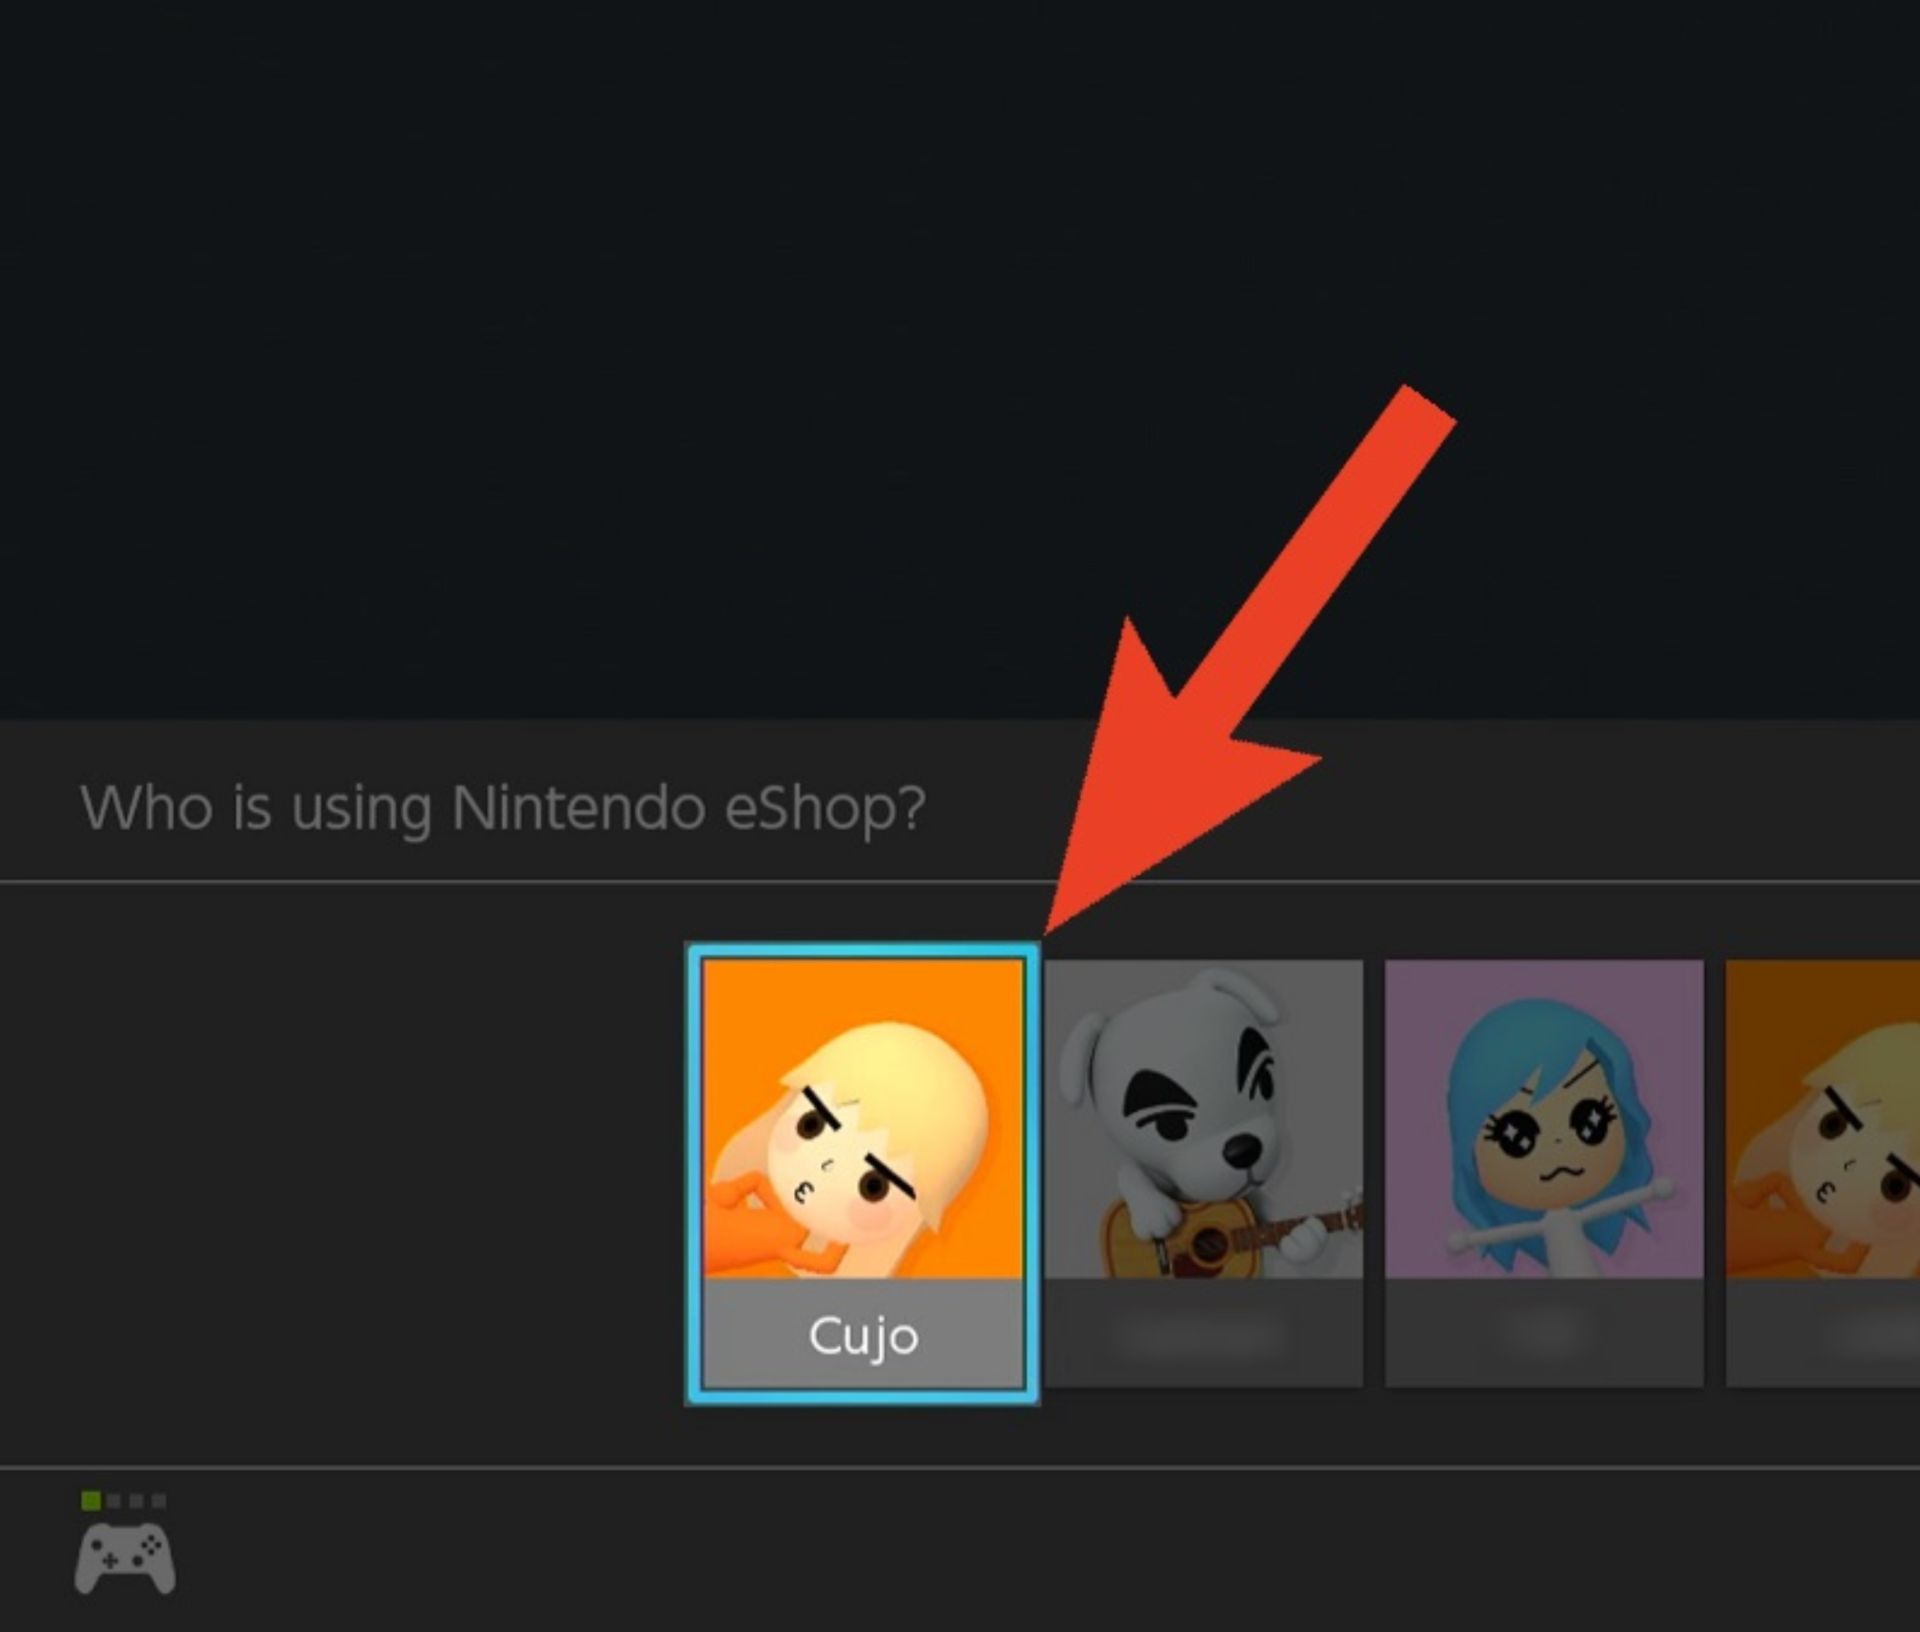 Under "Who is using Nintendo eShop?"